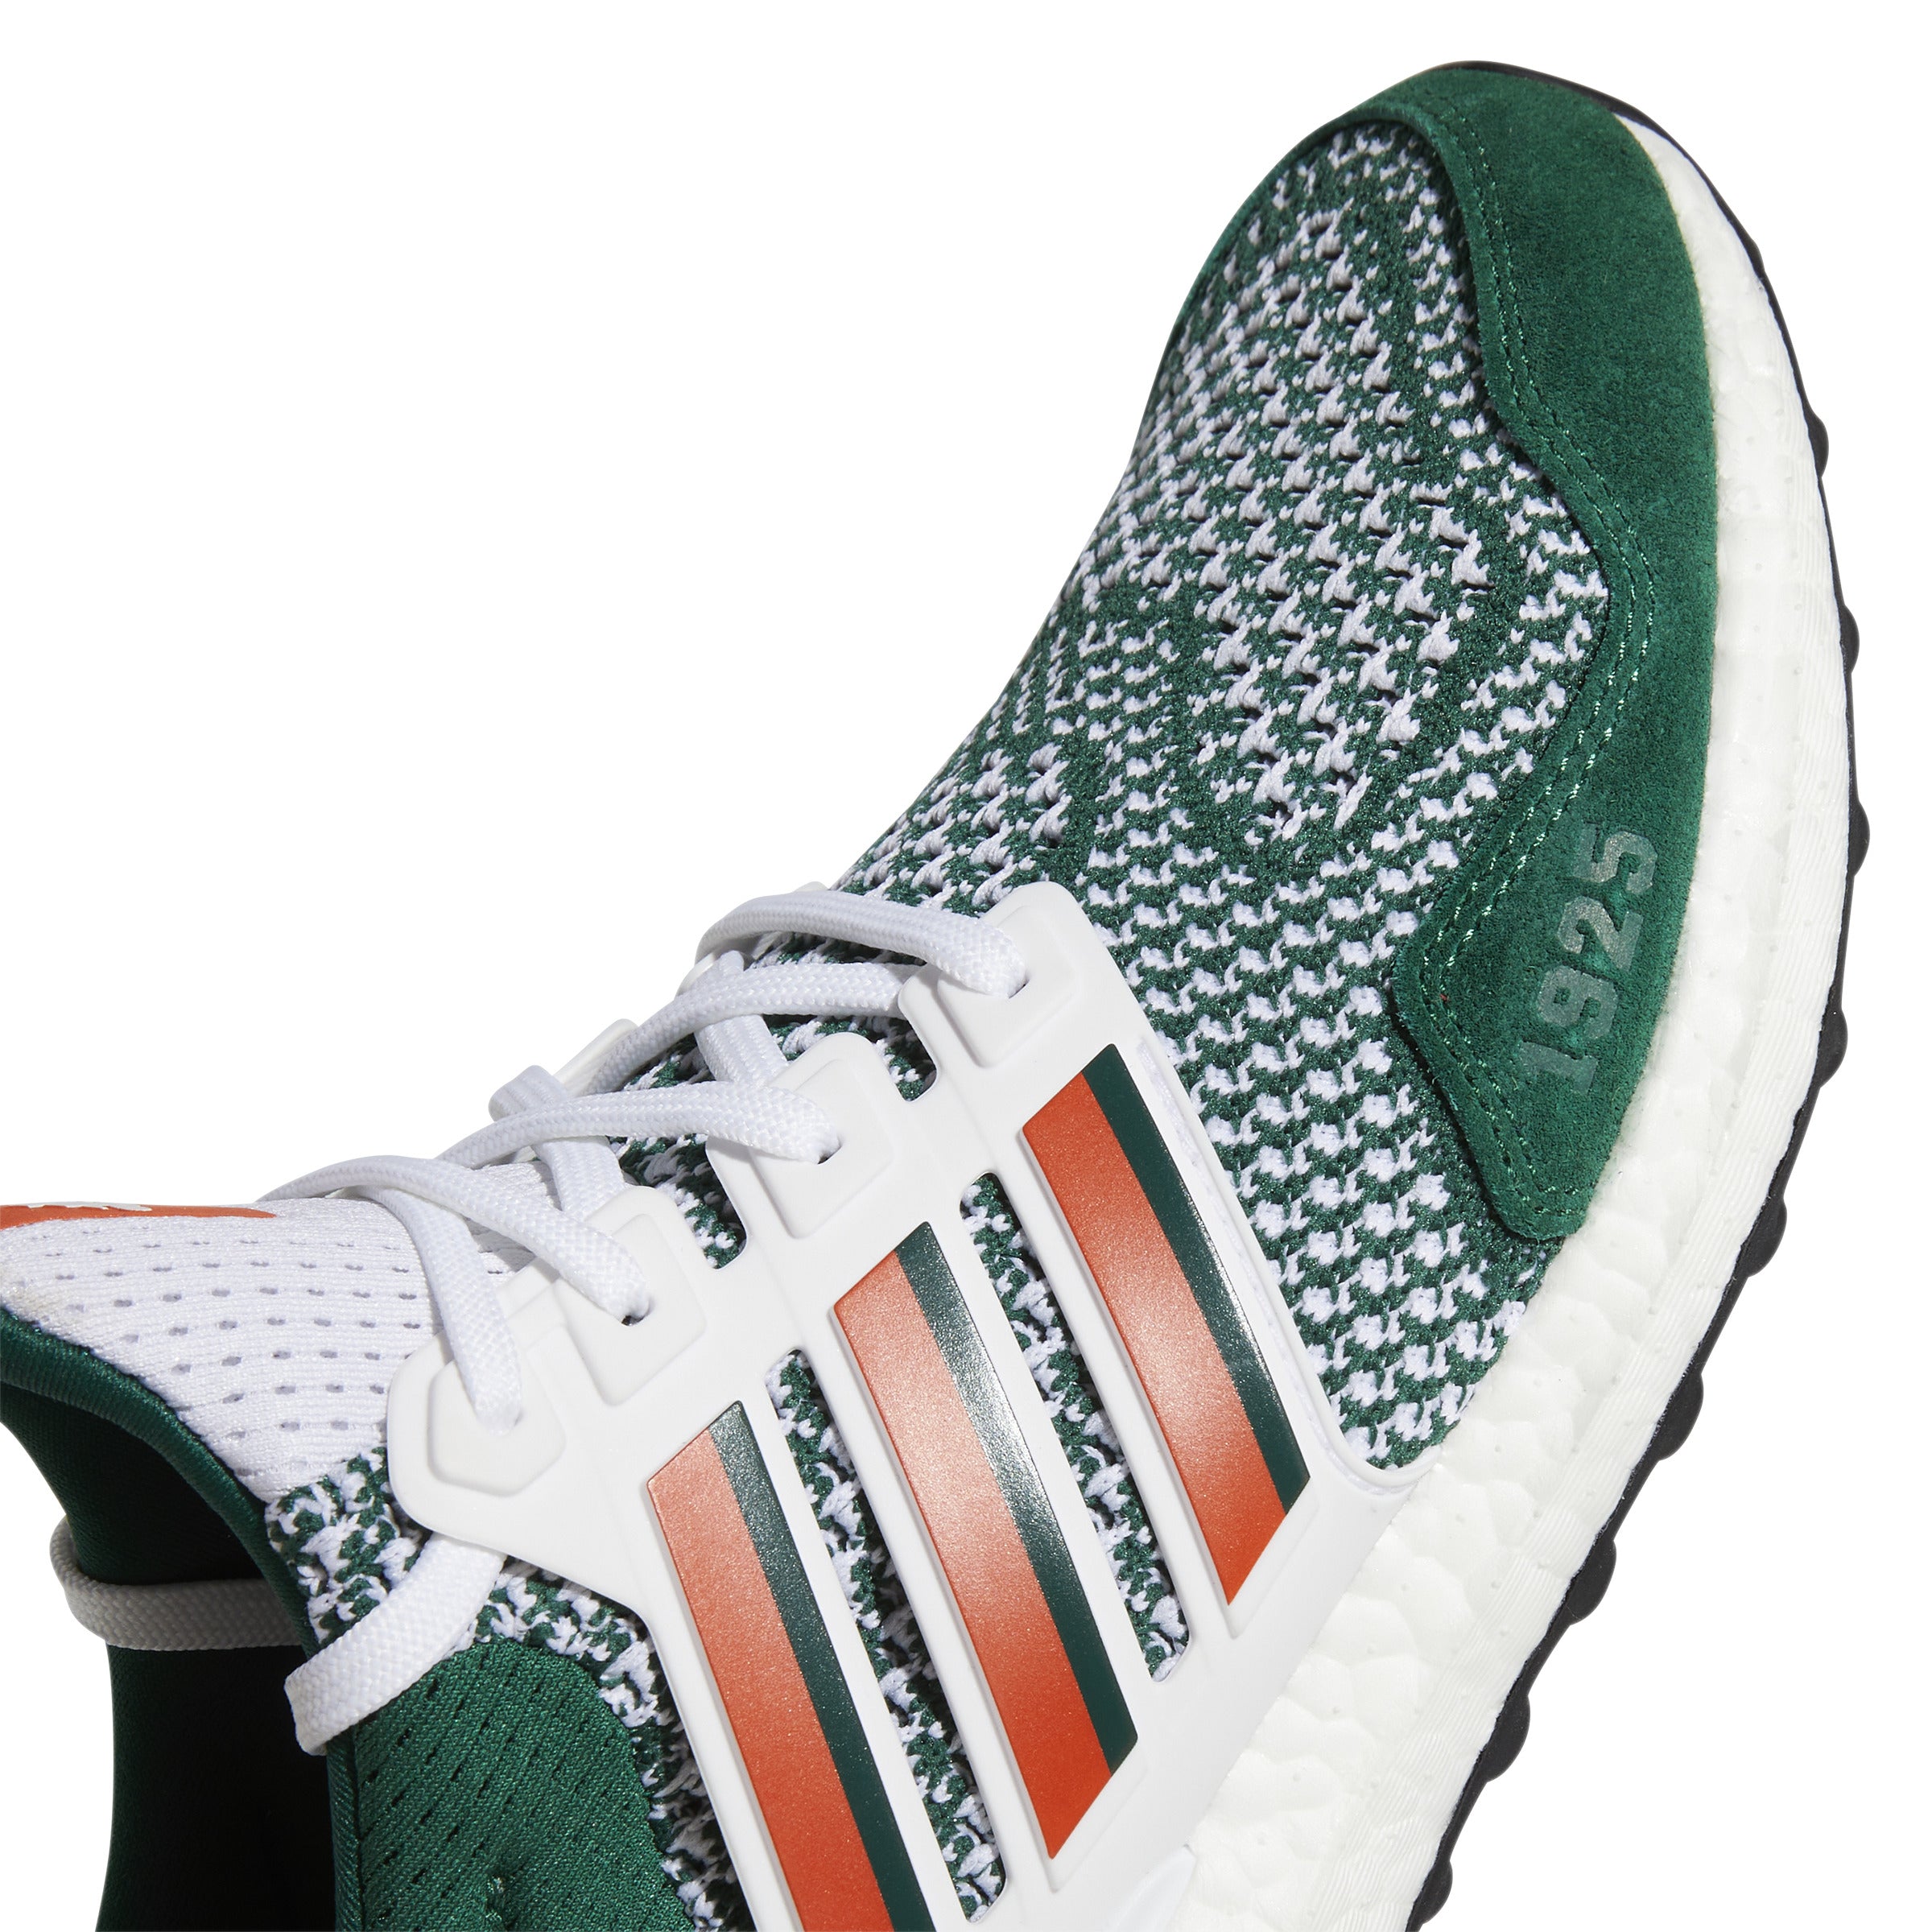 Miami Hurricanes adidas Ultraboost 1.0 Shoe / Sneakers - Green/Orange